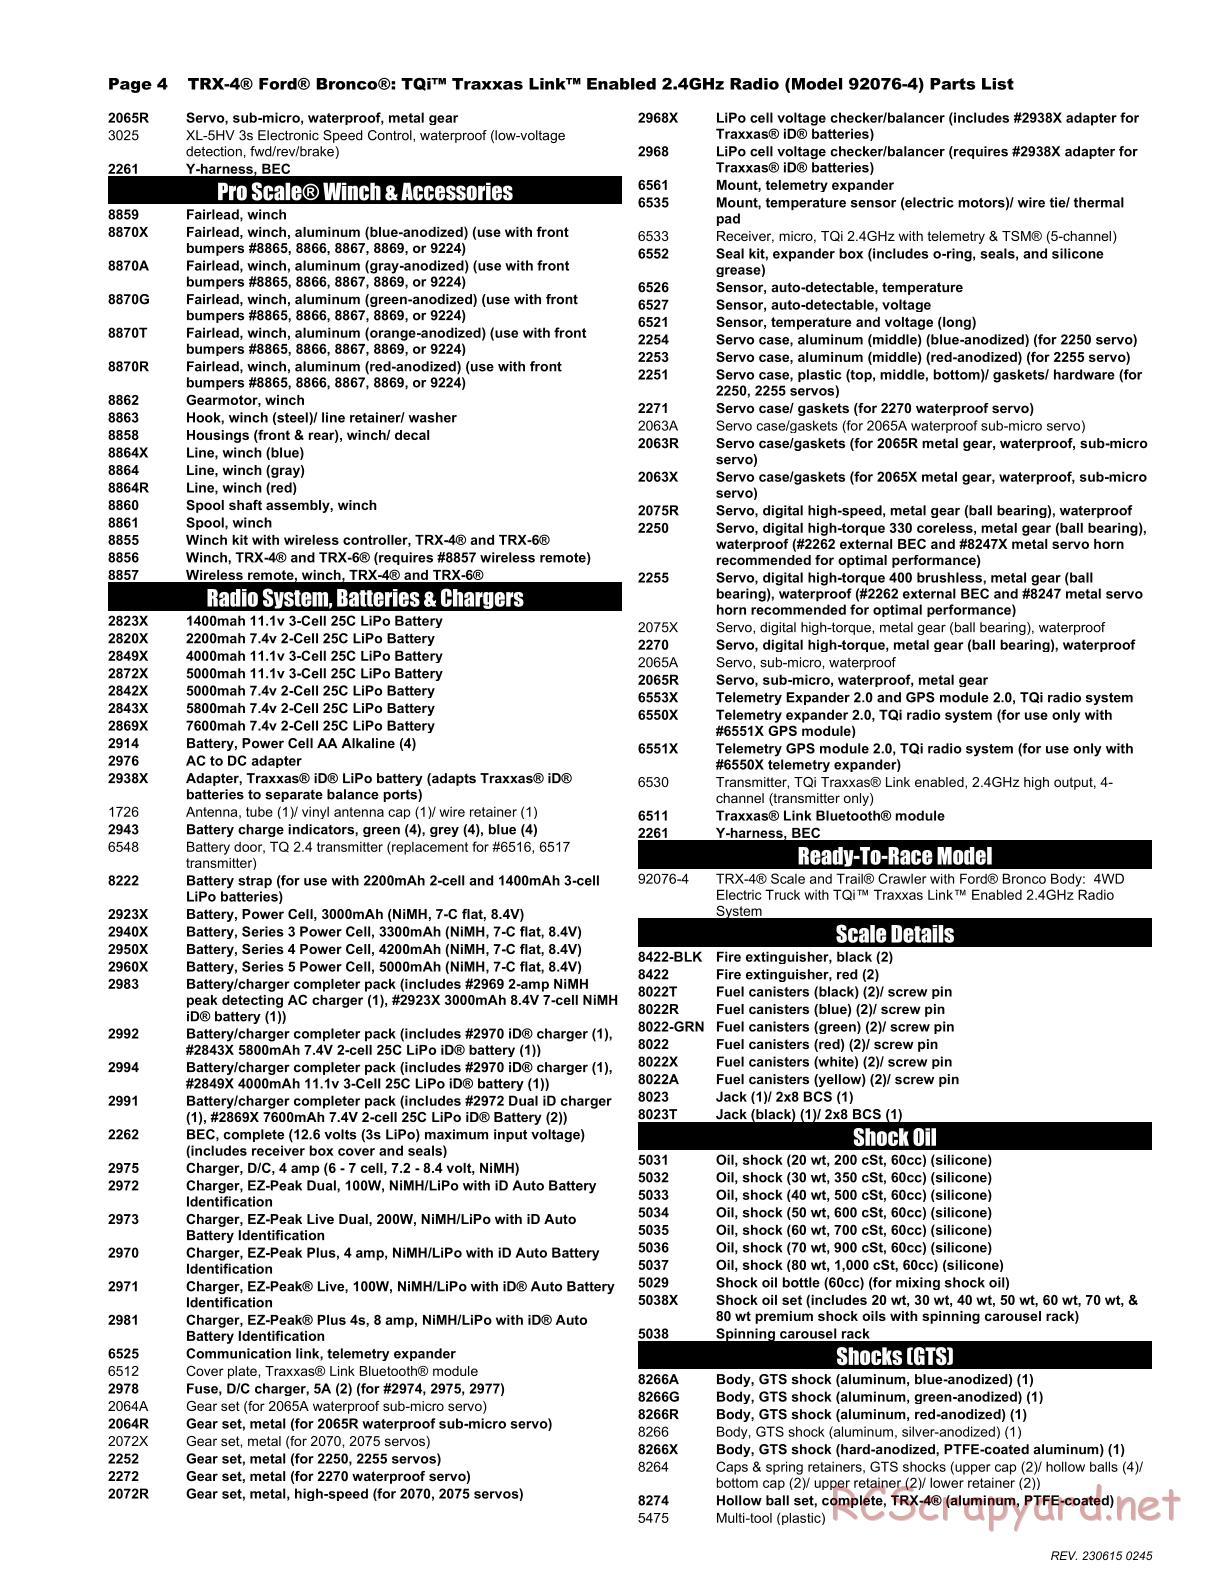 Traxxas - TRX-4 Ford Bronco (2021) - Parts List - Page 4